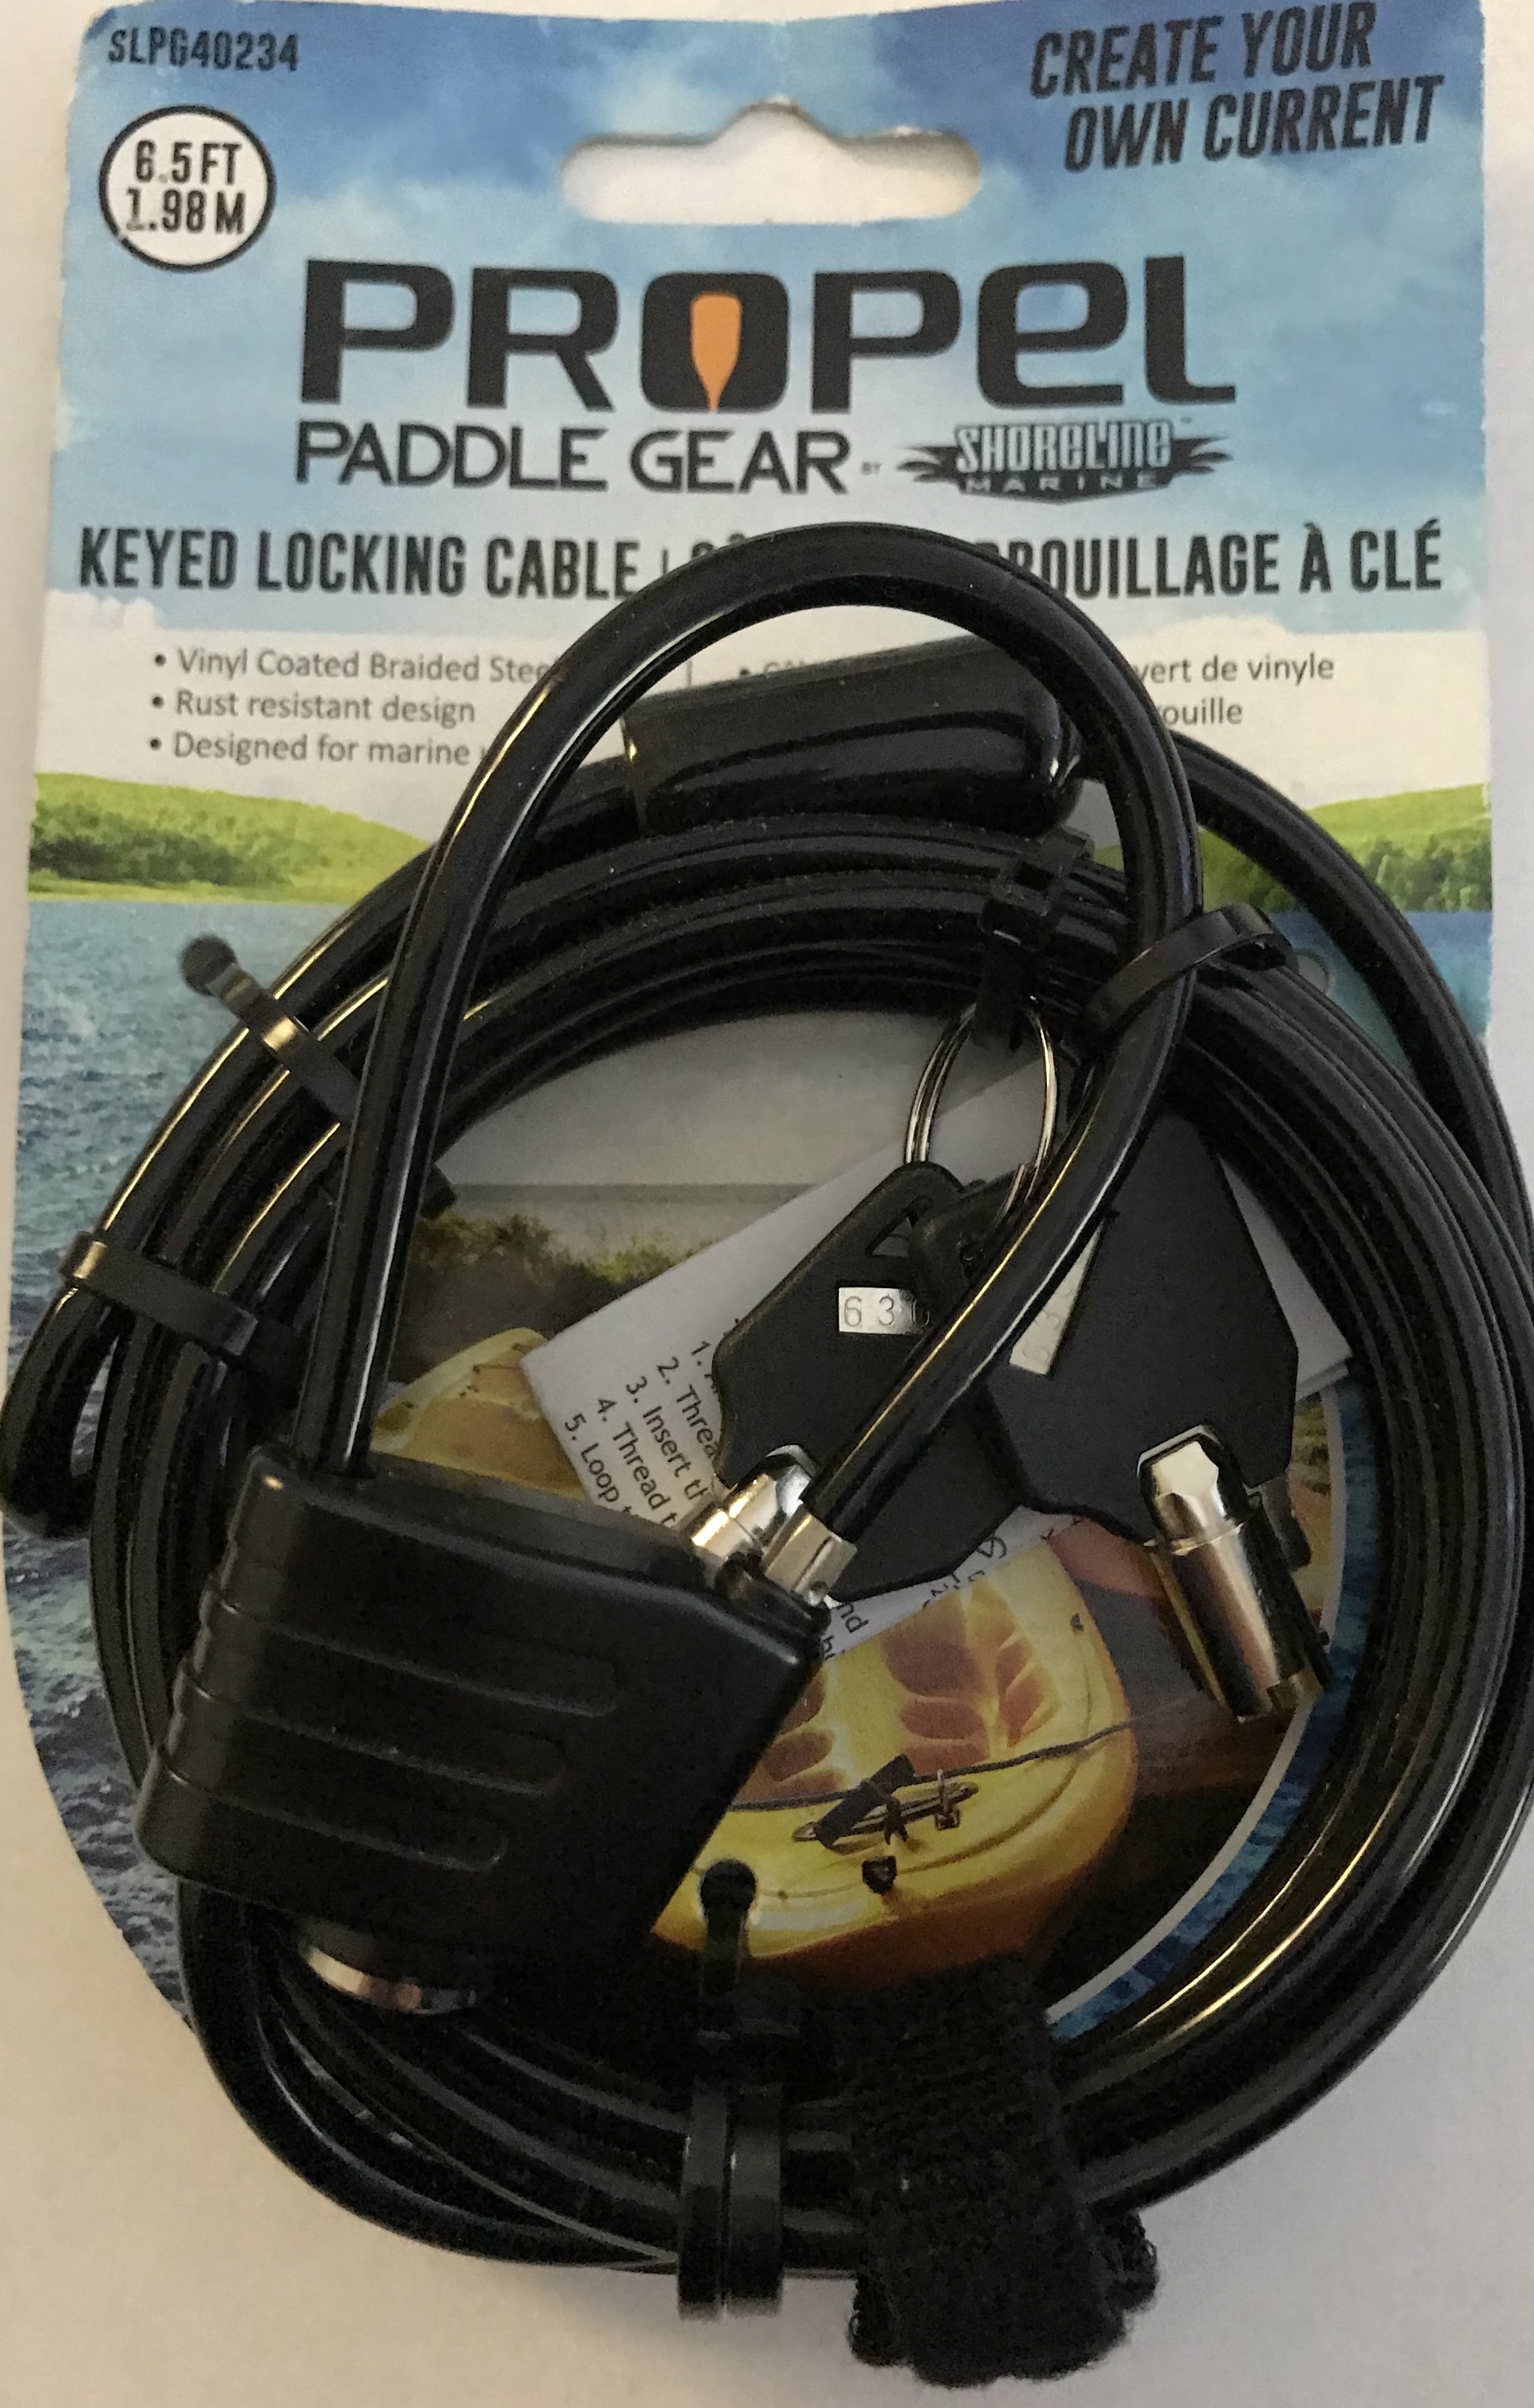 Propel Paddle Gear SLPG40234 Paddlesports Locking Cable 